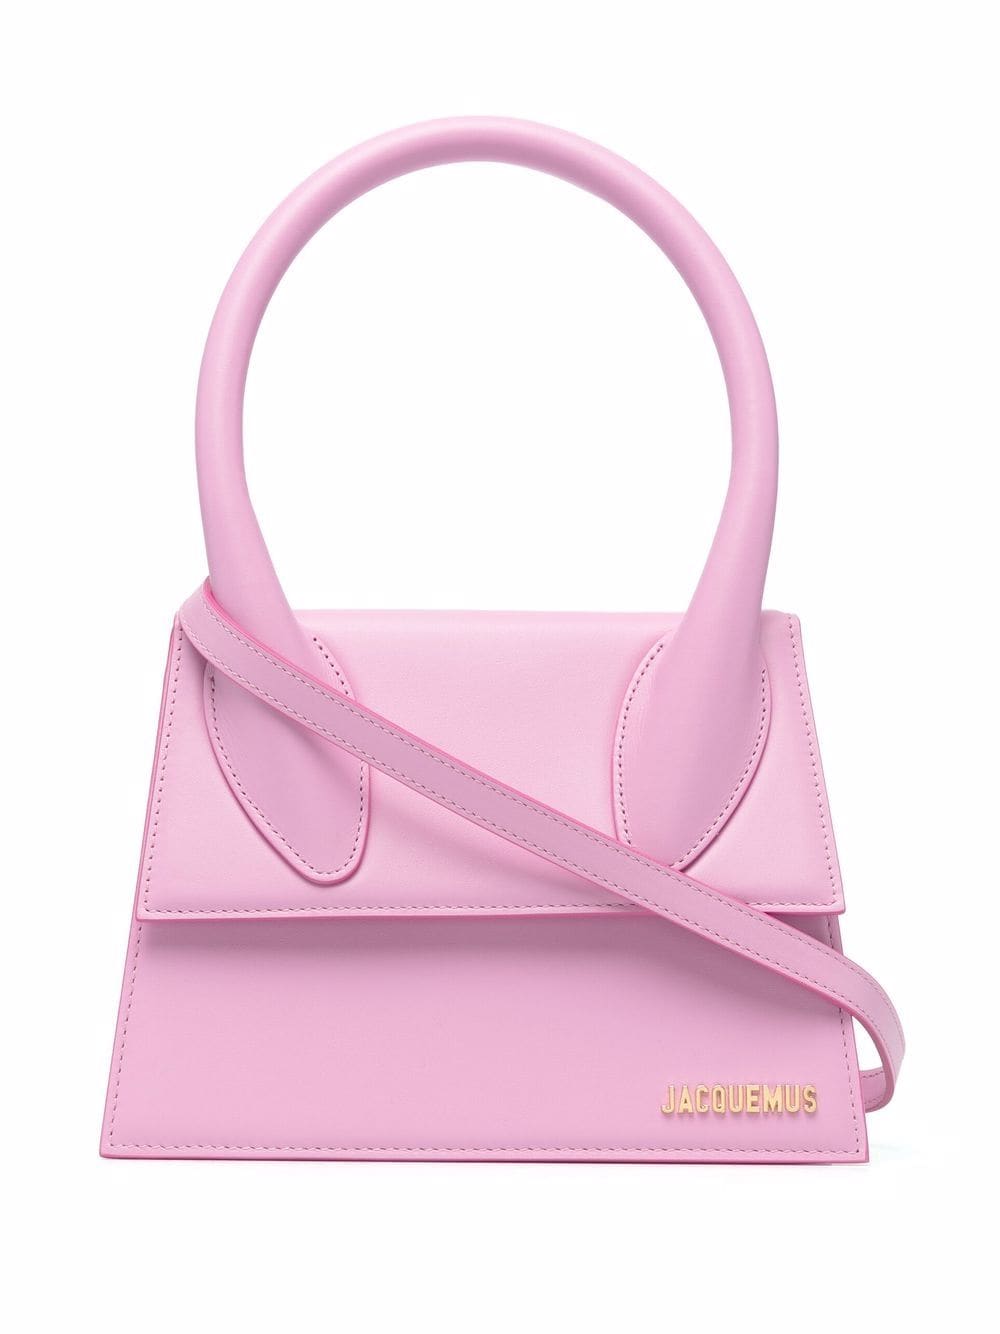 Jacquemus Le Grand Chiquito Handbag In Pink | ModeSens